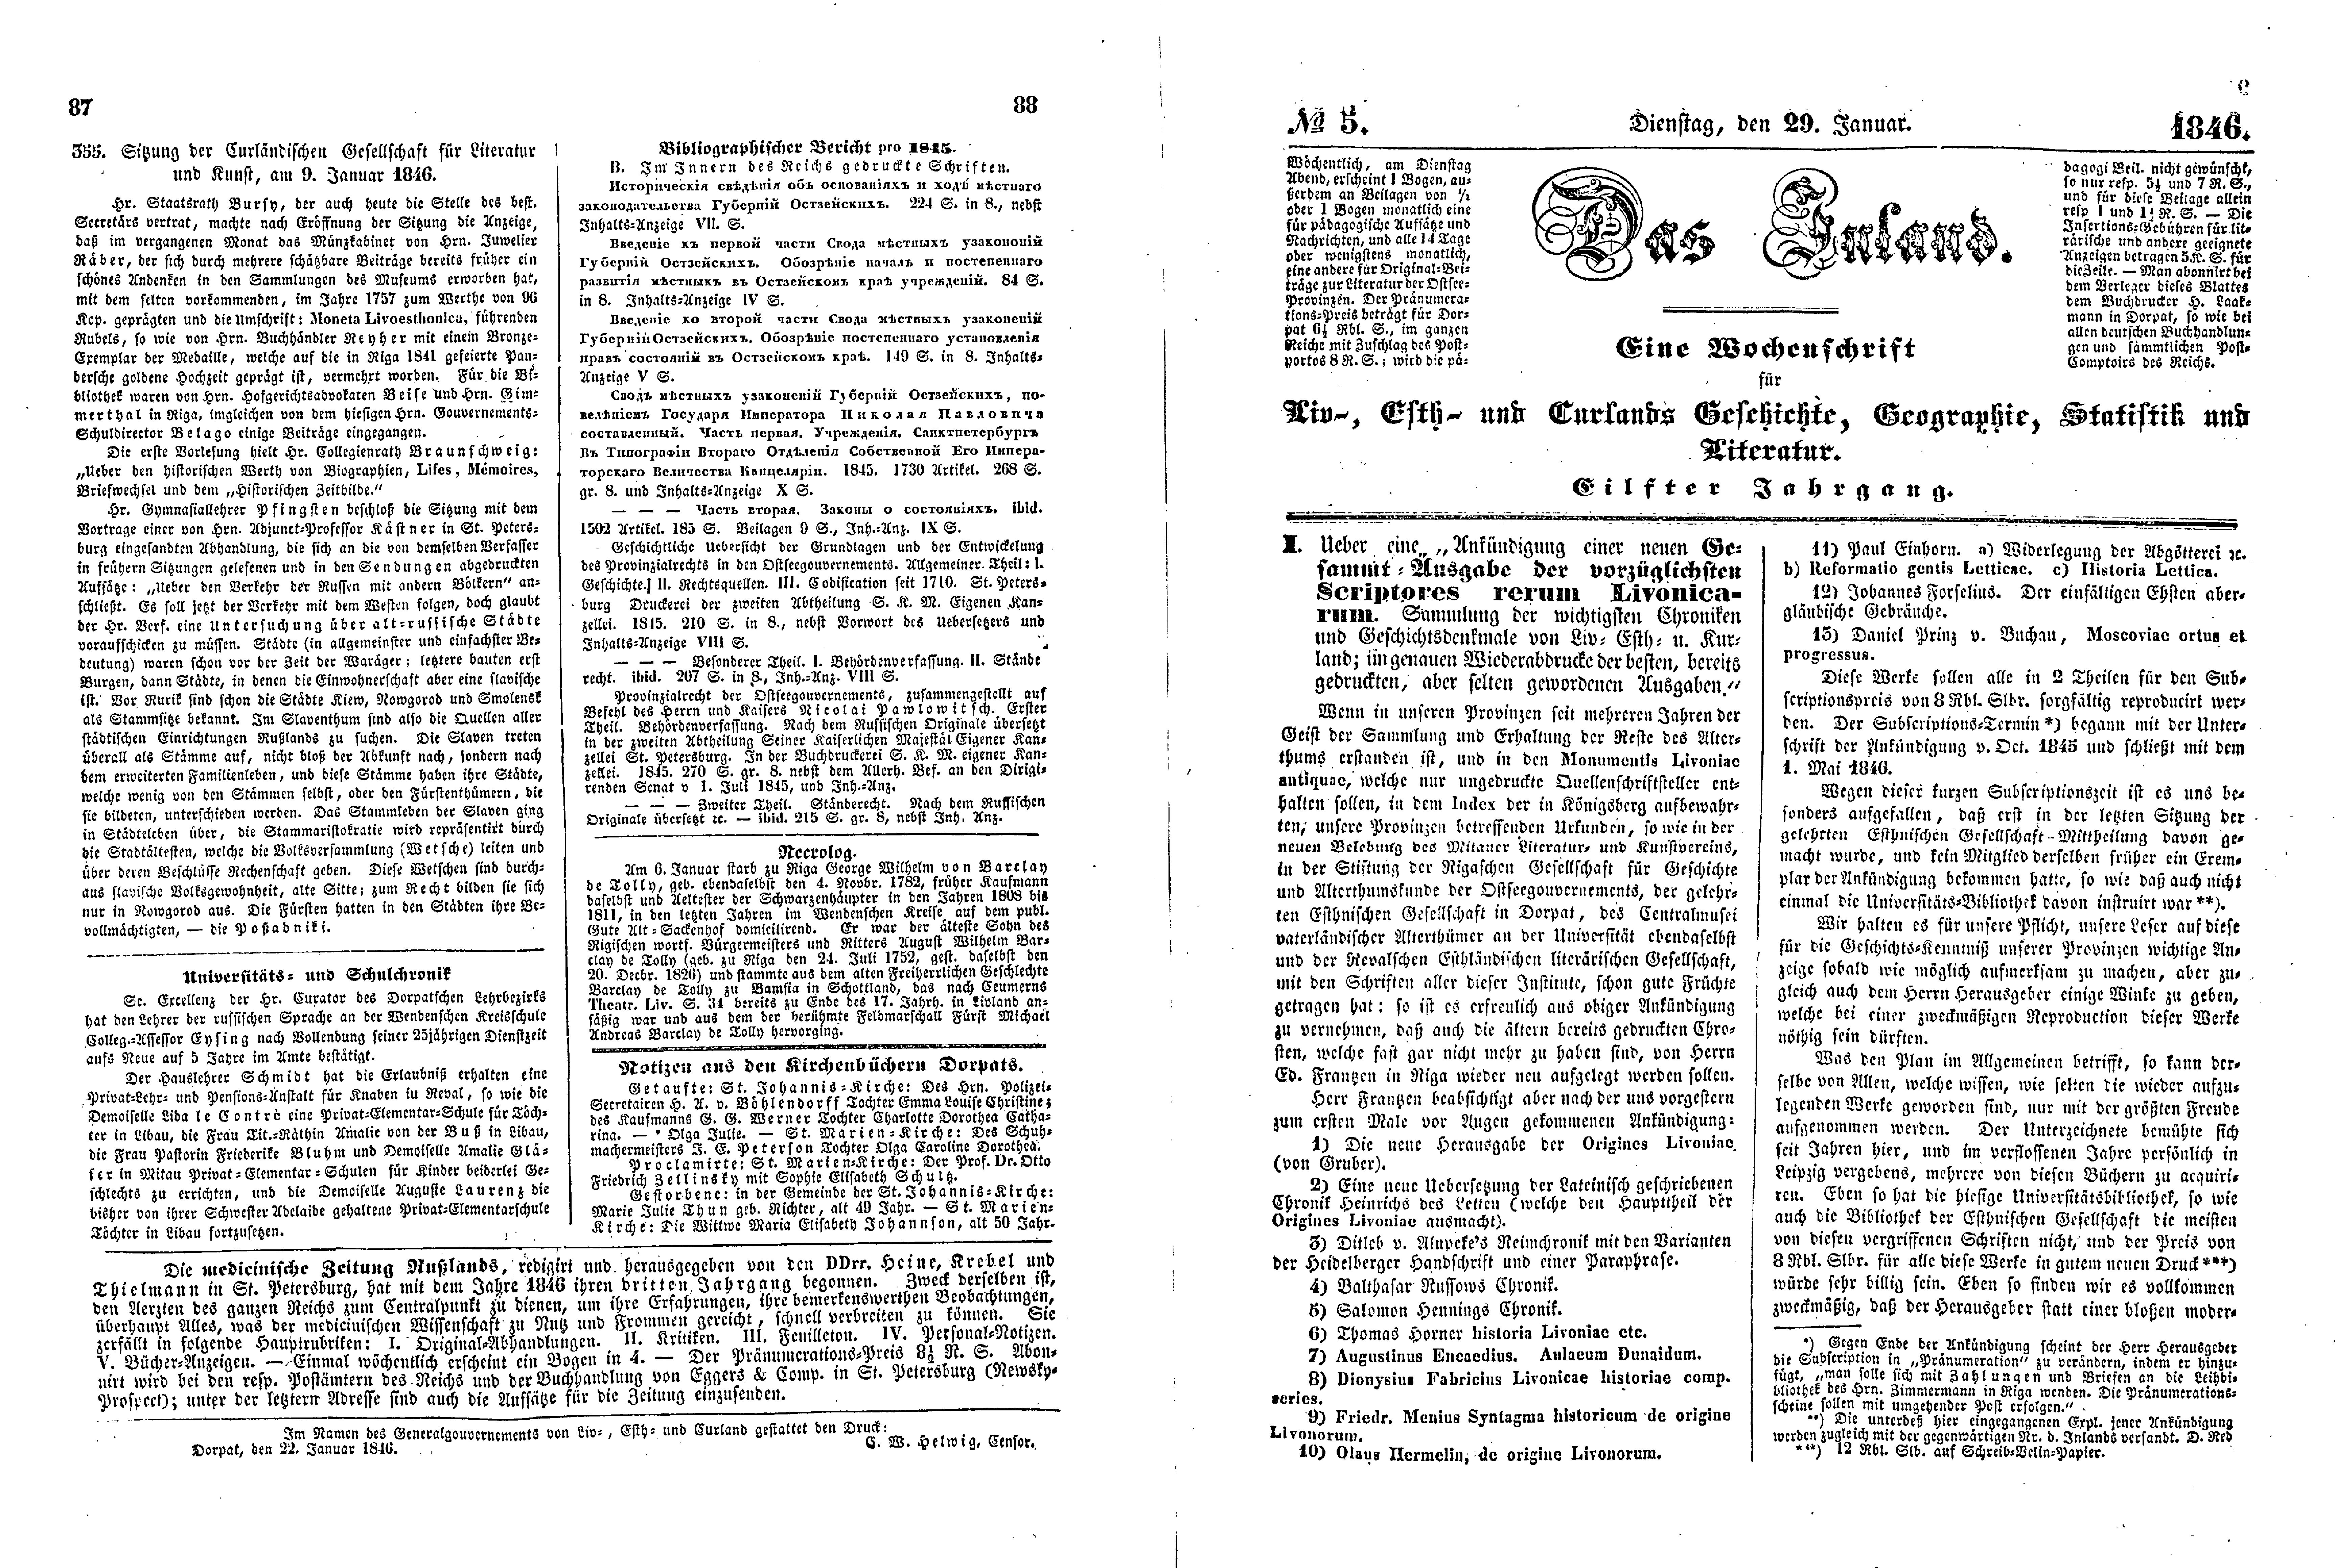 Das Inland [11] (1846) | 27. (87-90) Main body of text